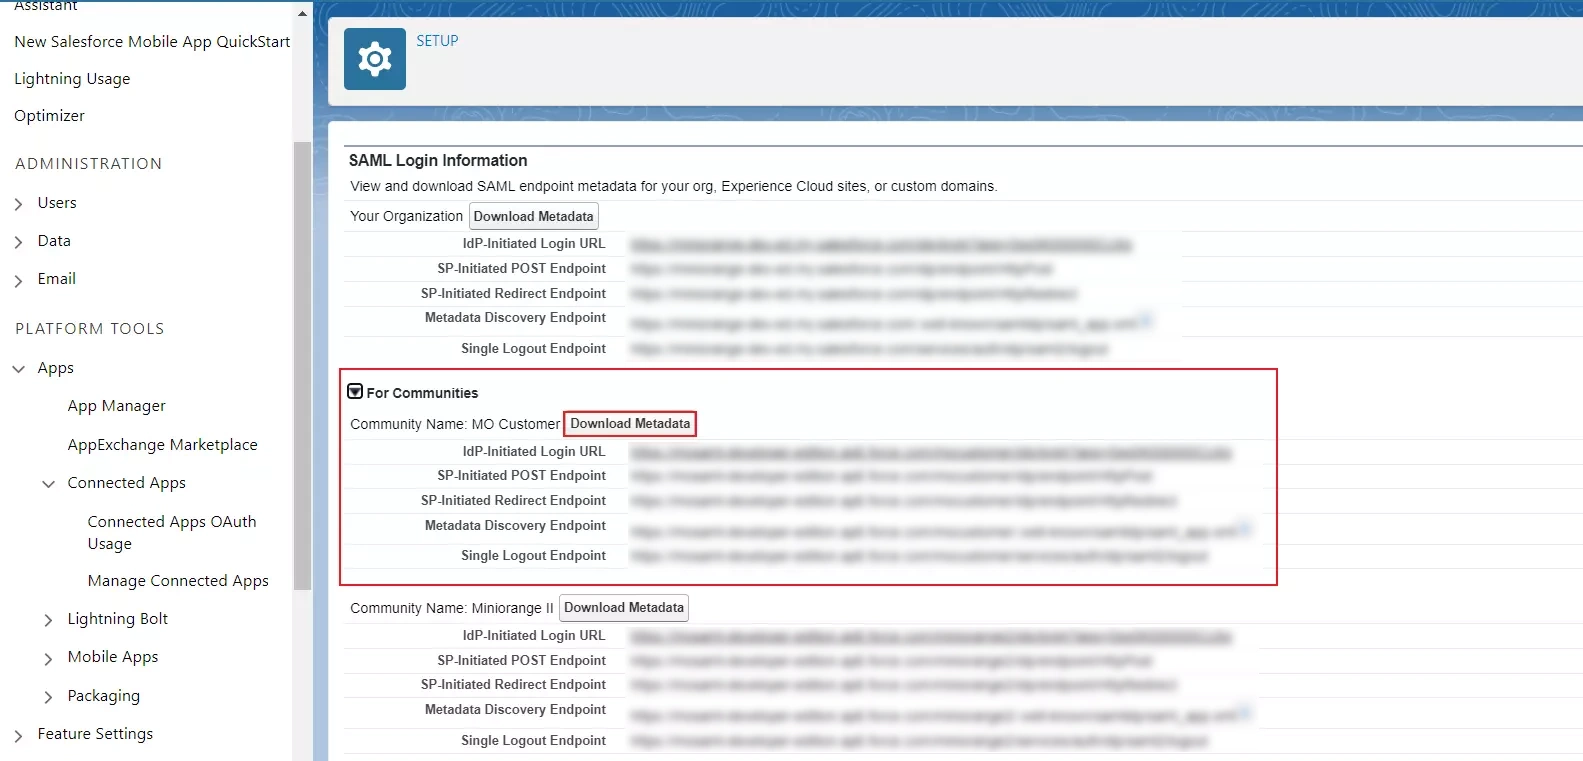 ASP.NET SAML Single Sign-On (SSO) using Salesforce Community as IDP - Download Identity Providers metadata